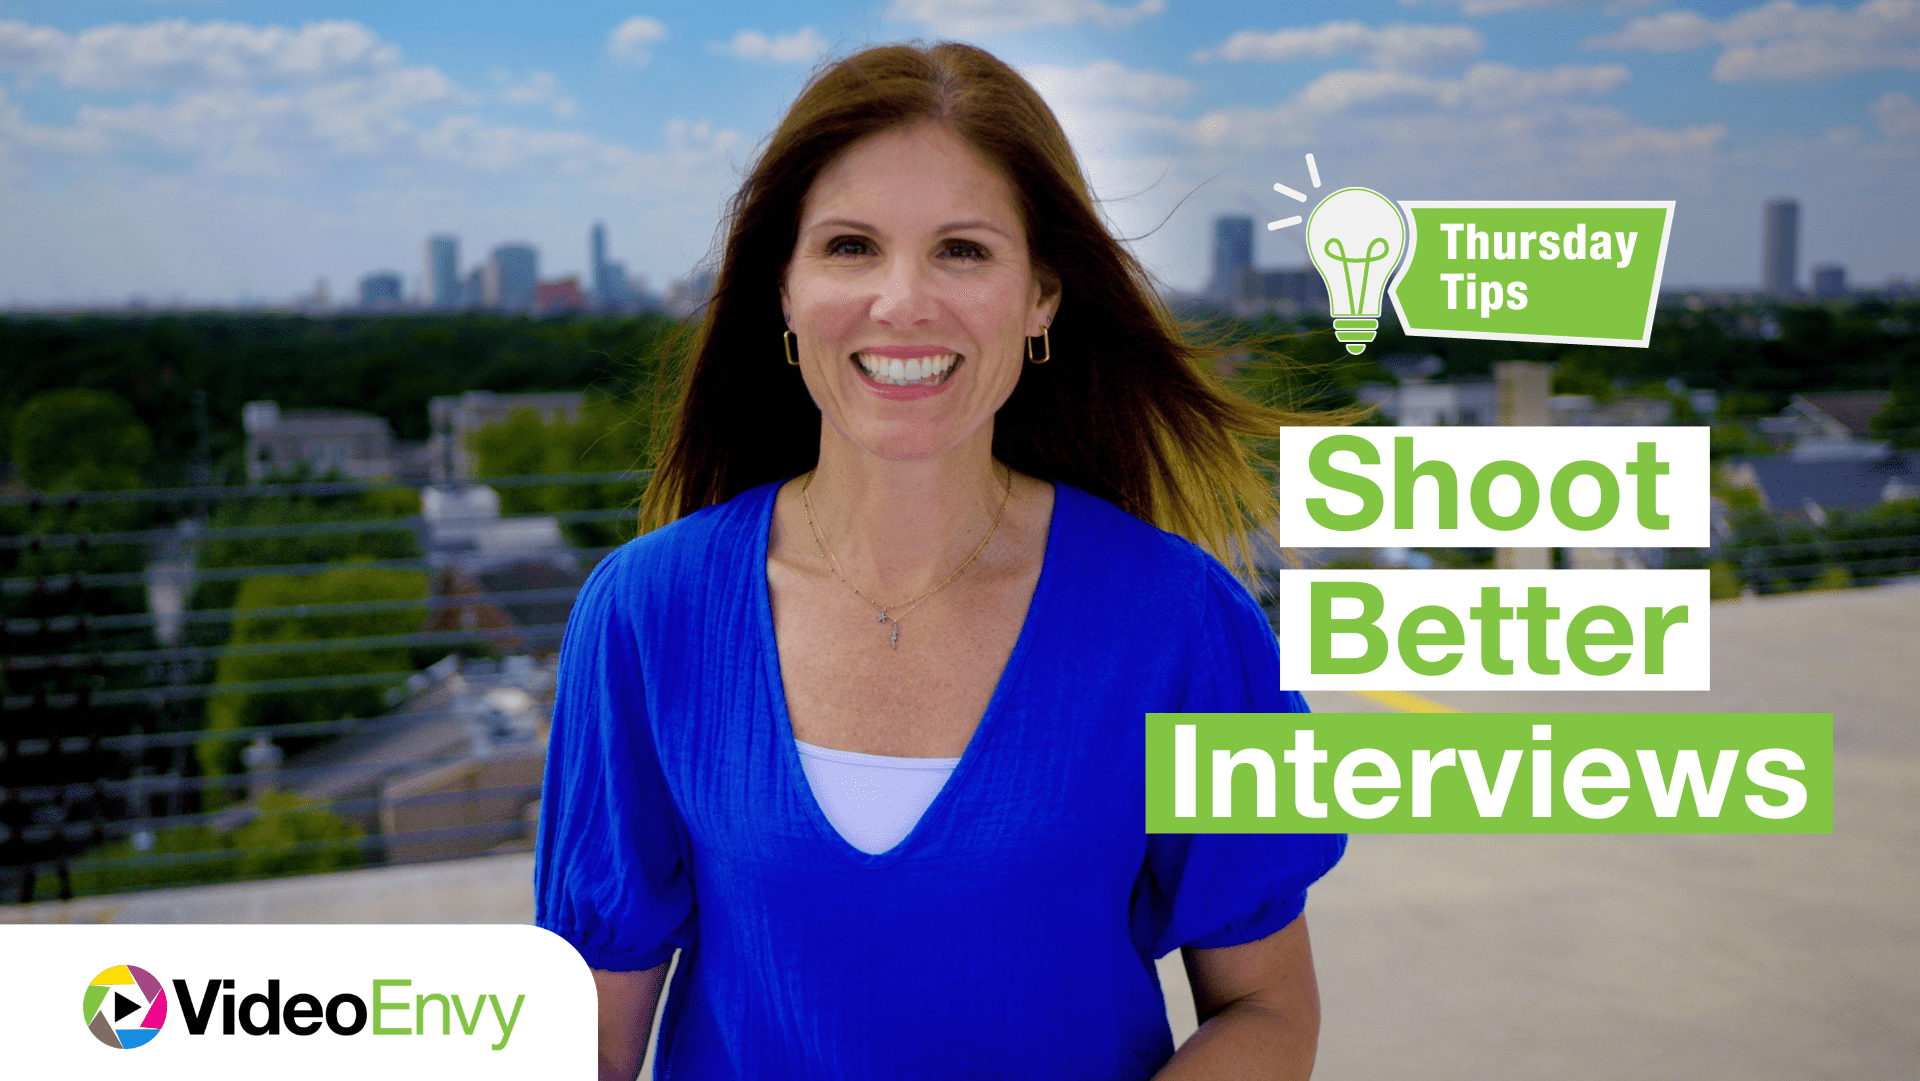 Thursday Tips: Shoot Better Interviews